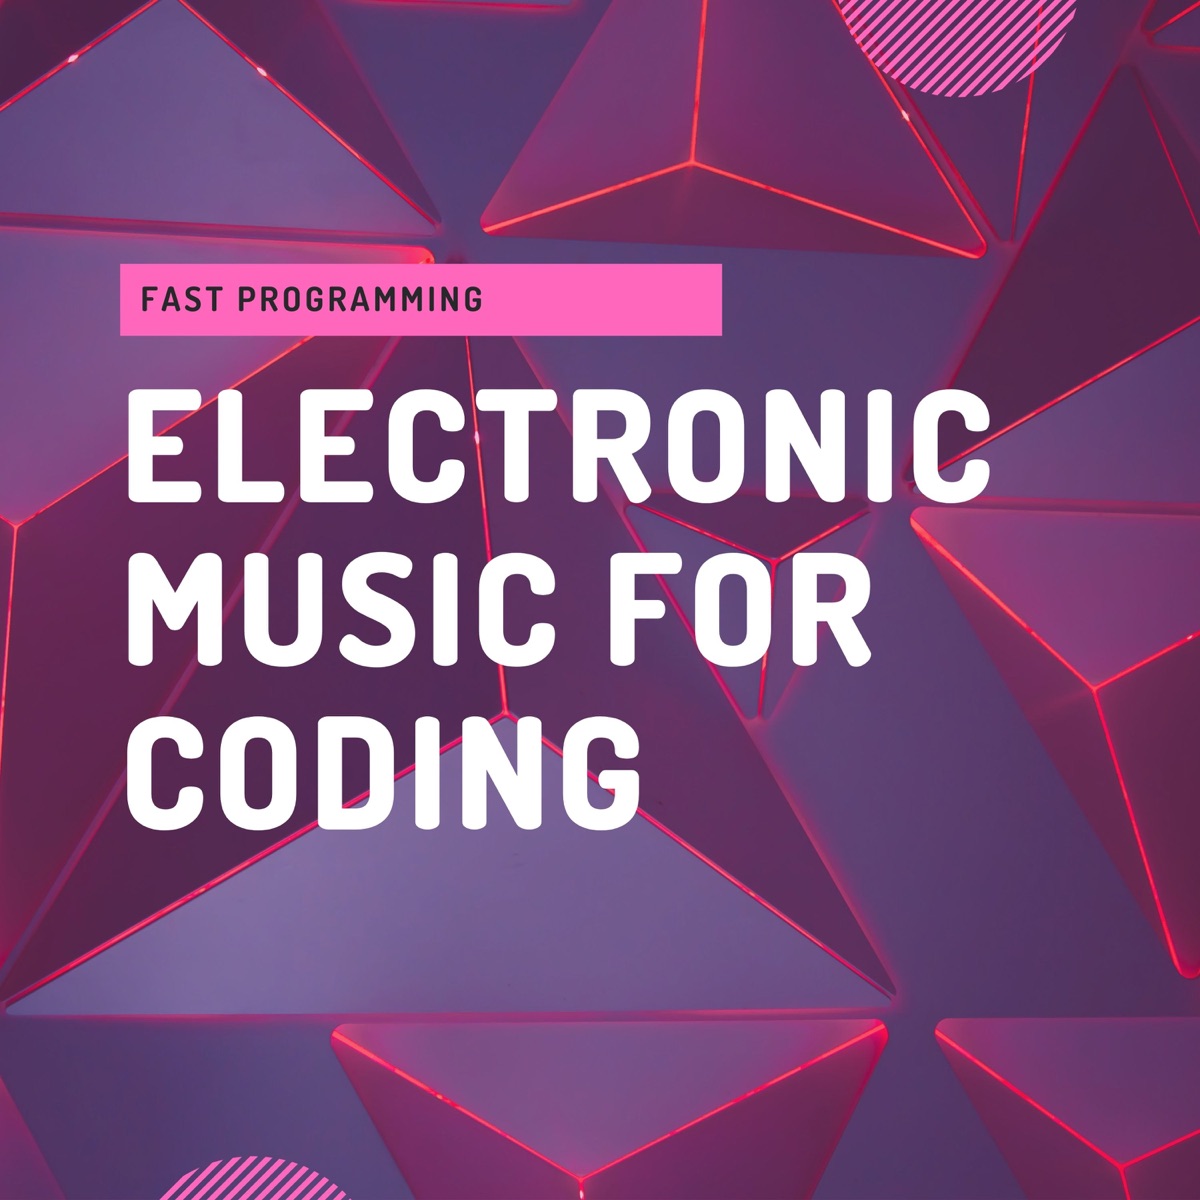 Music for Programming – Coding Music Playlists, Radio Stations